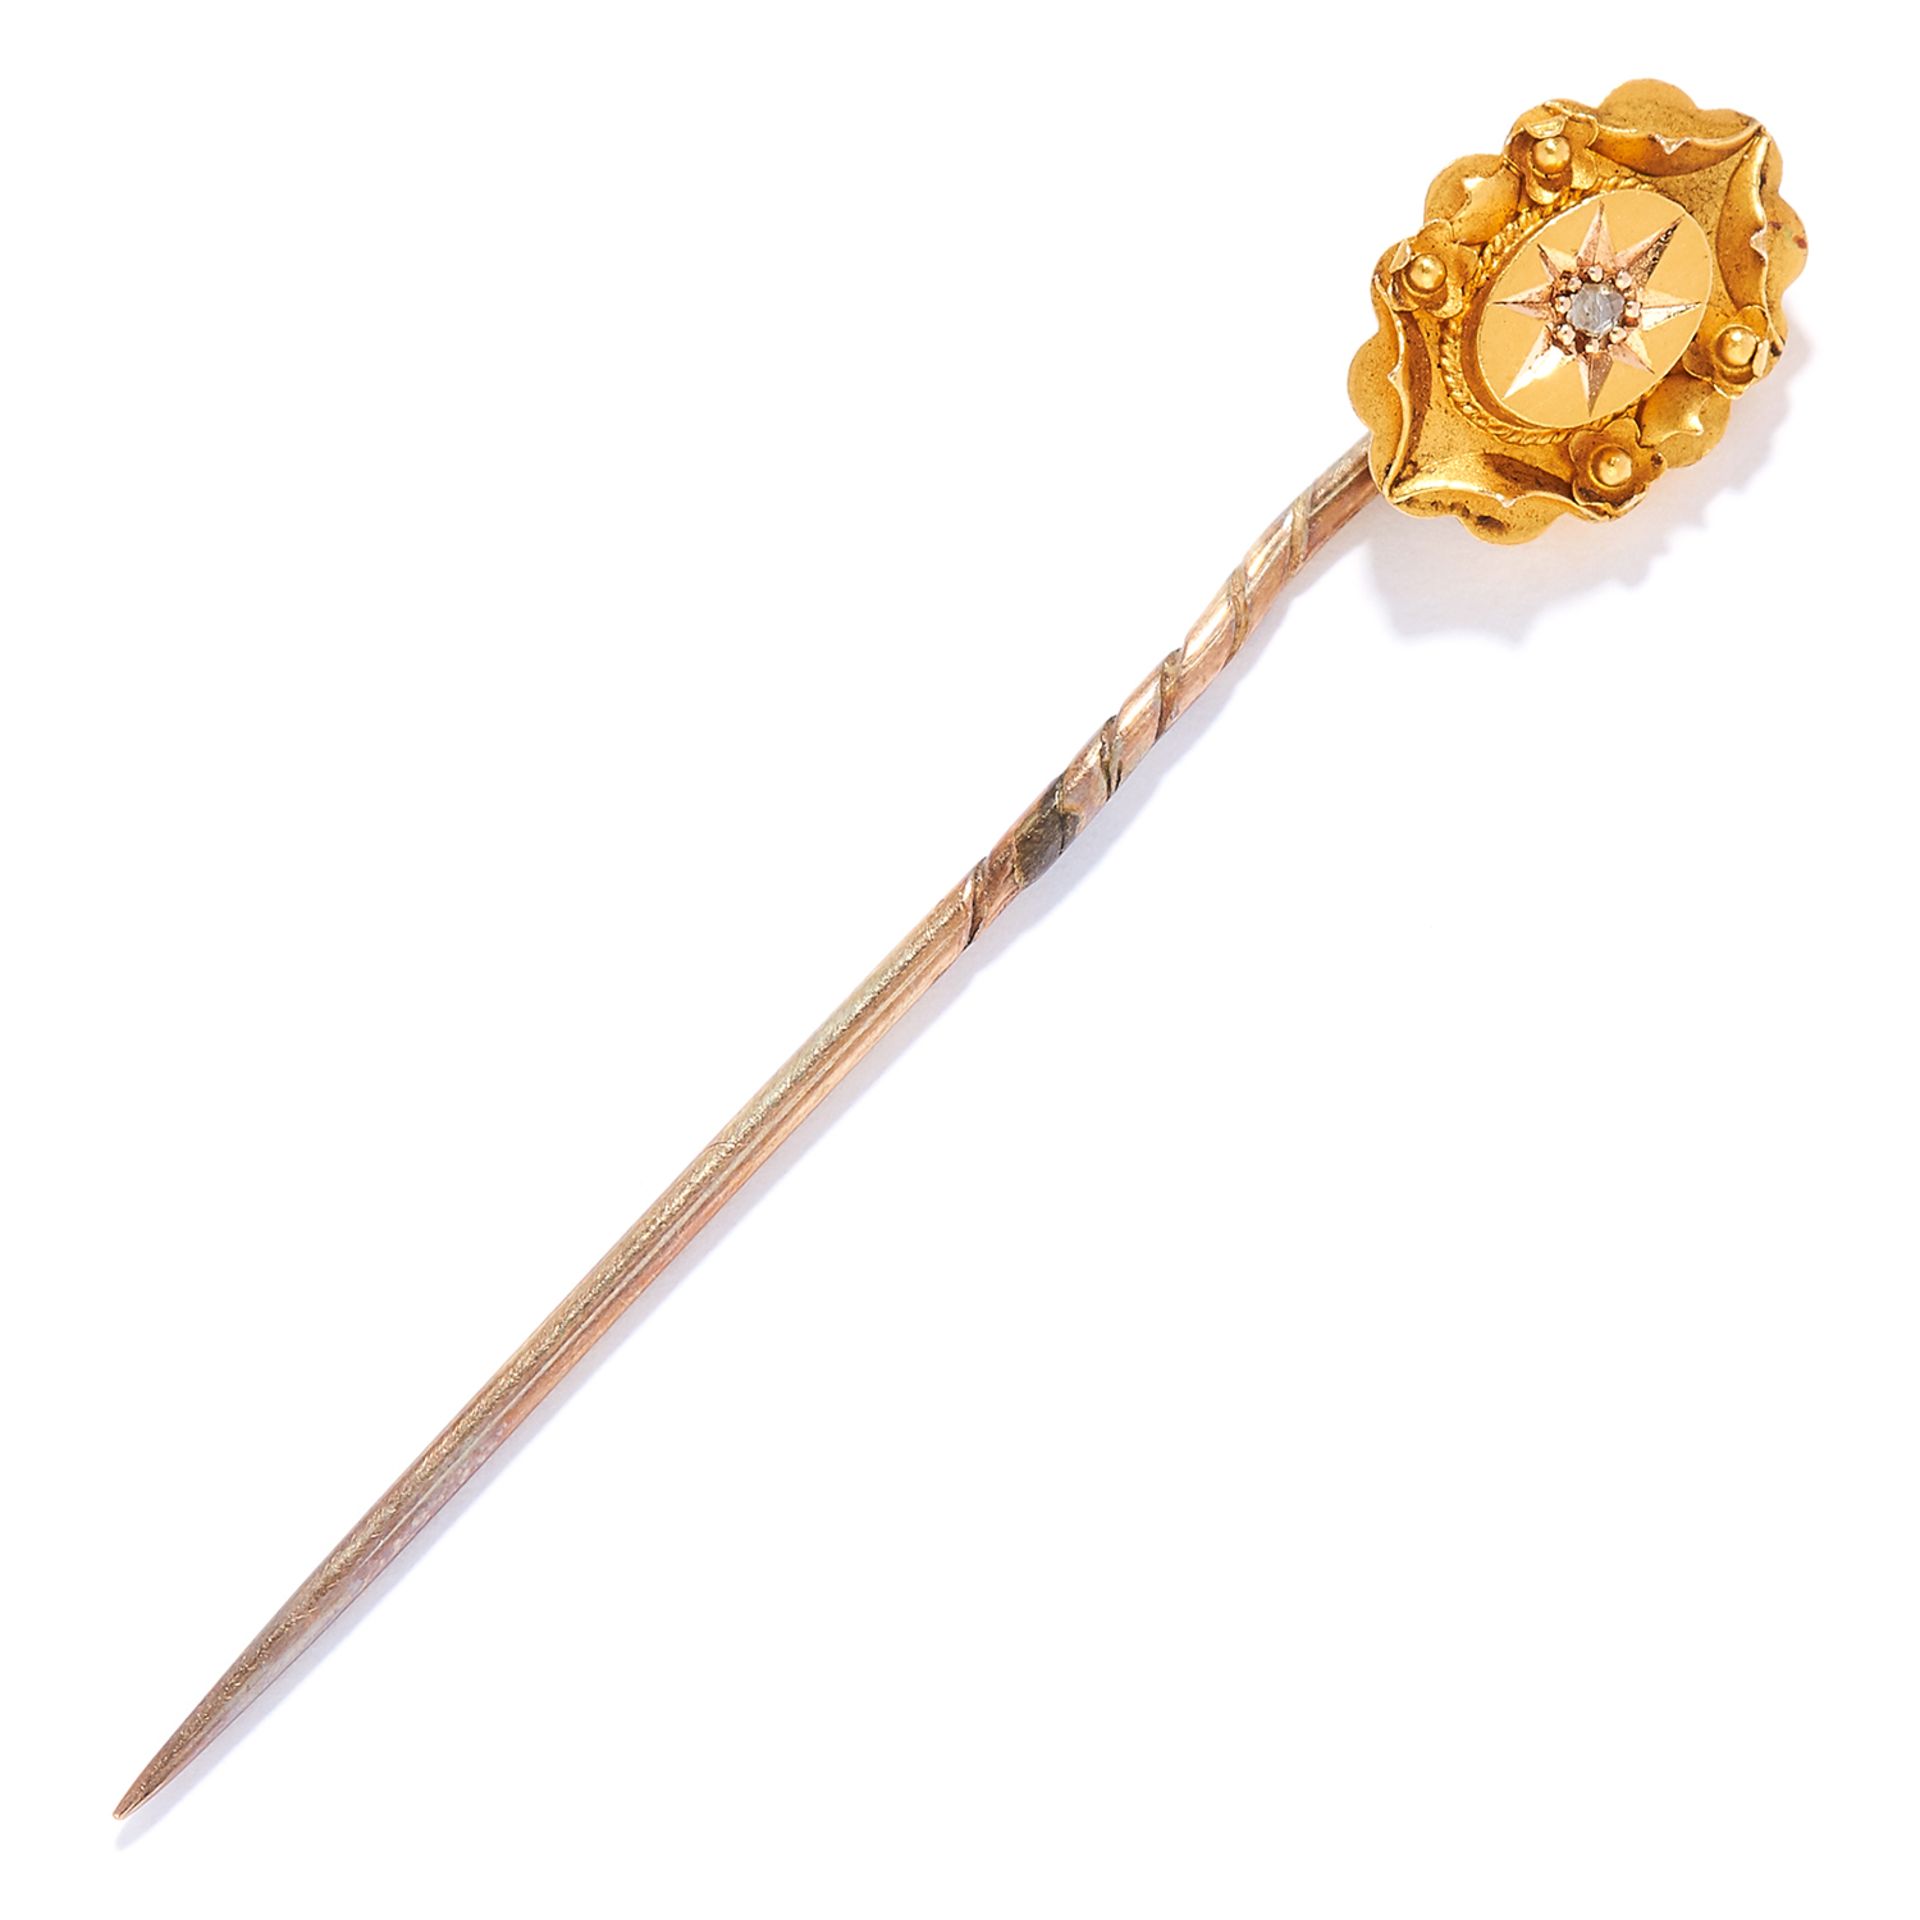 ANTIQUE DIAMOND STICK PIN set with a rose cut diamond, 5.8cm, 1.4g.